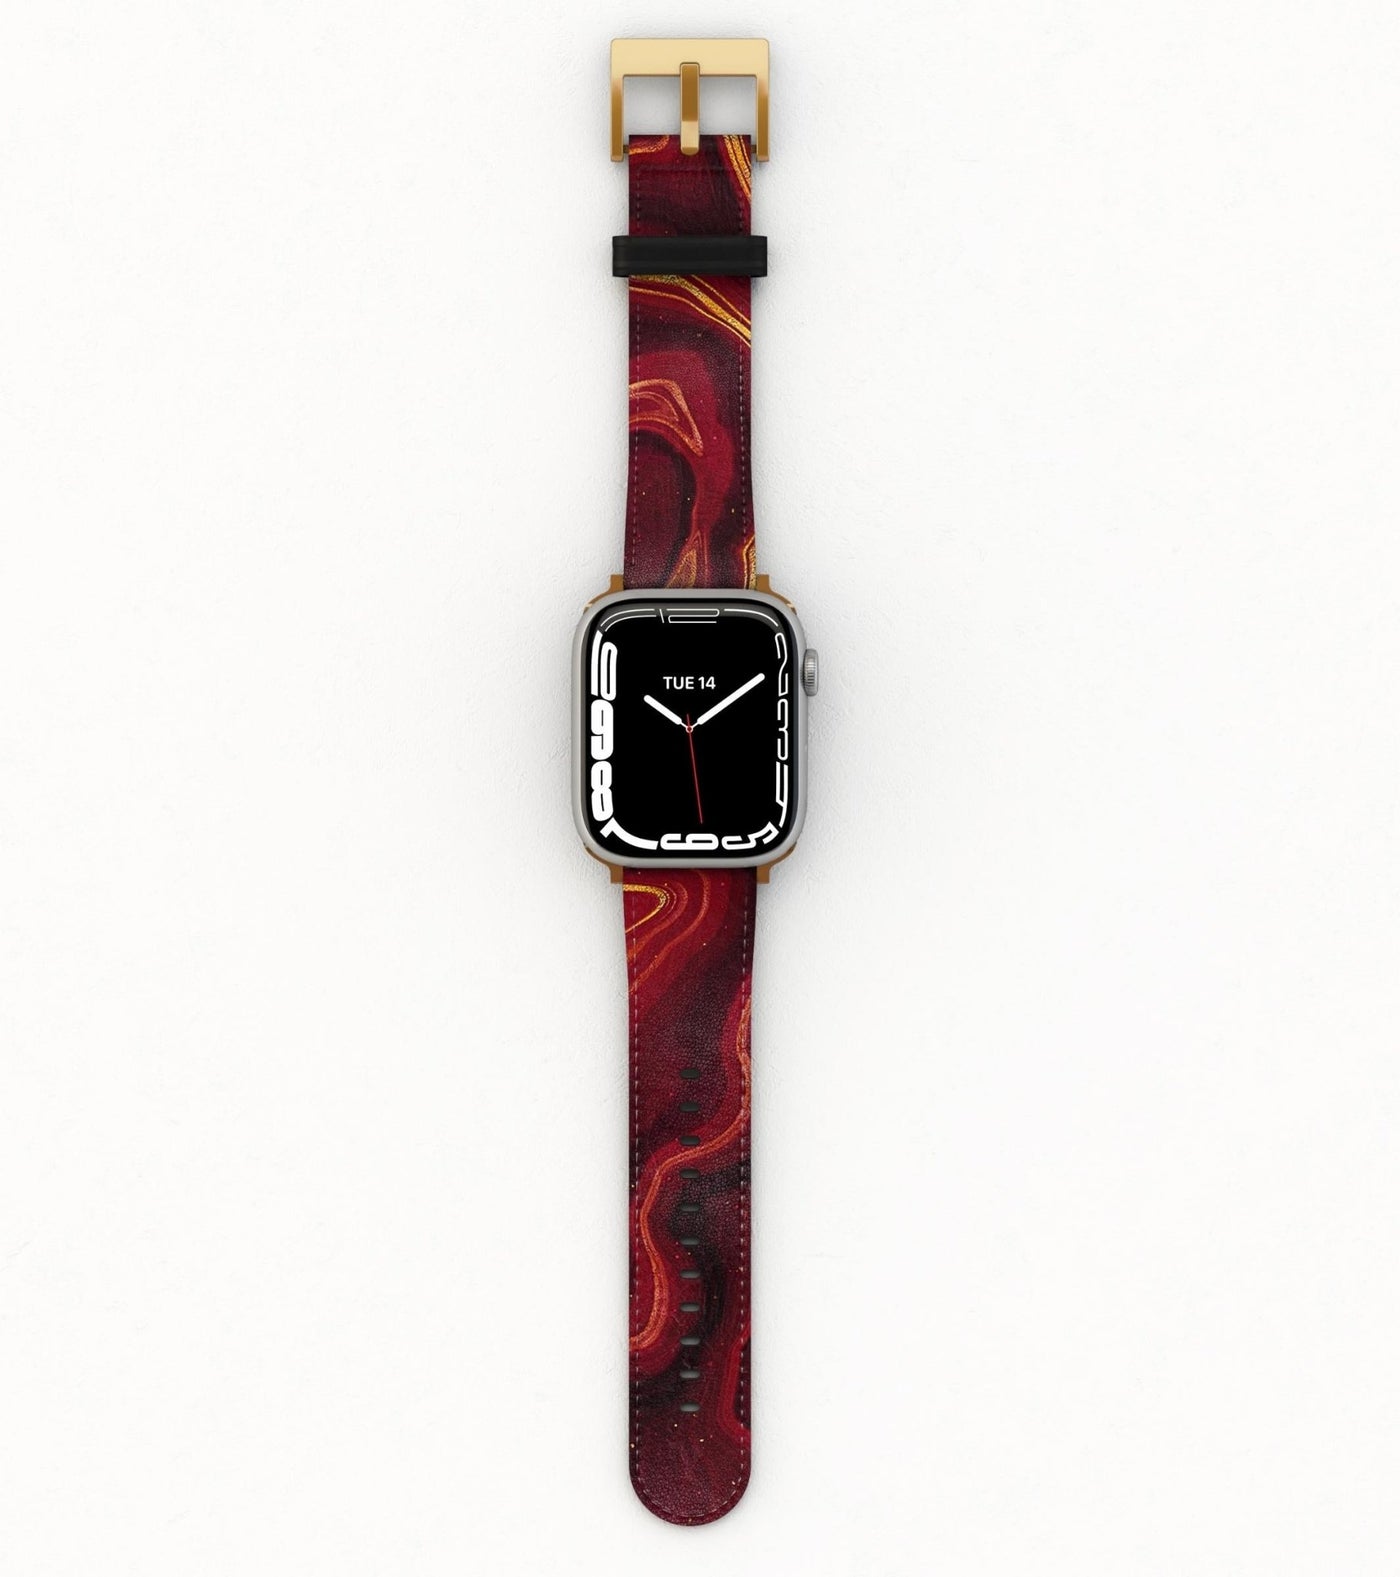 Fiery Passion - Apple Watch Band